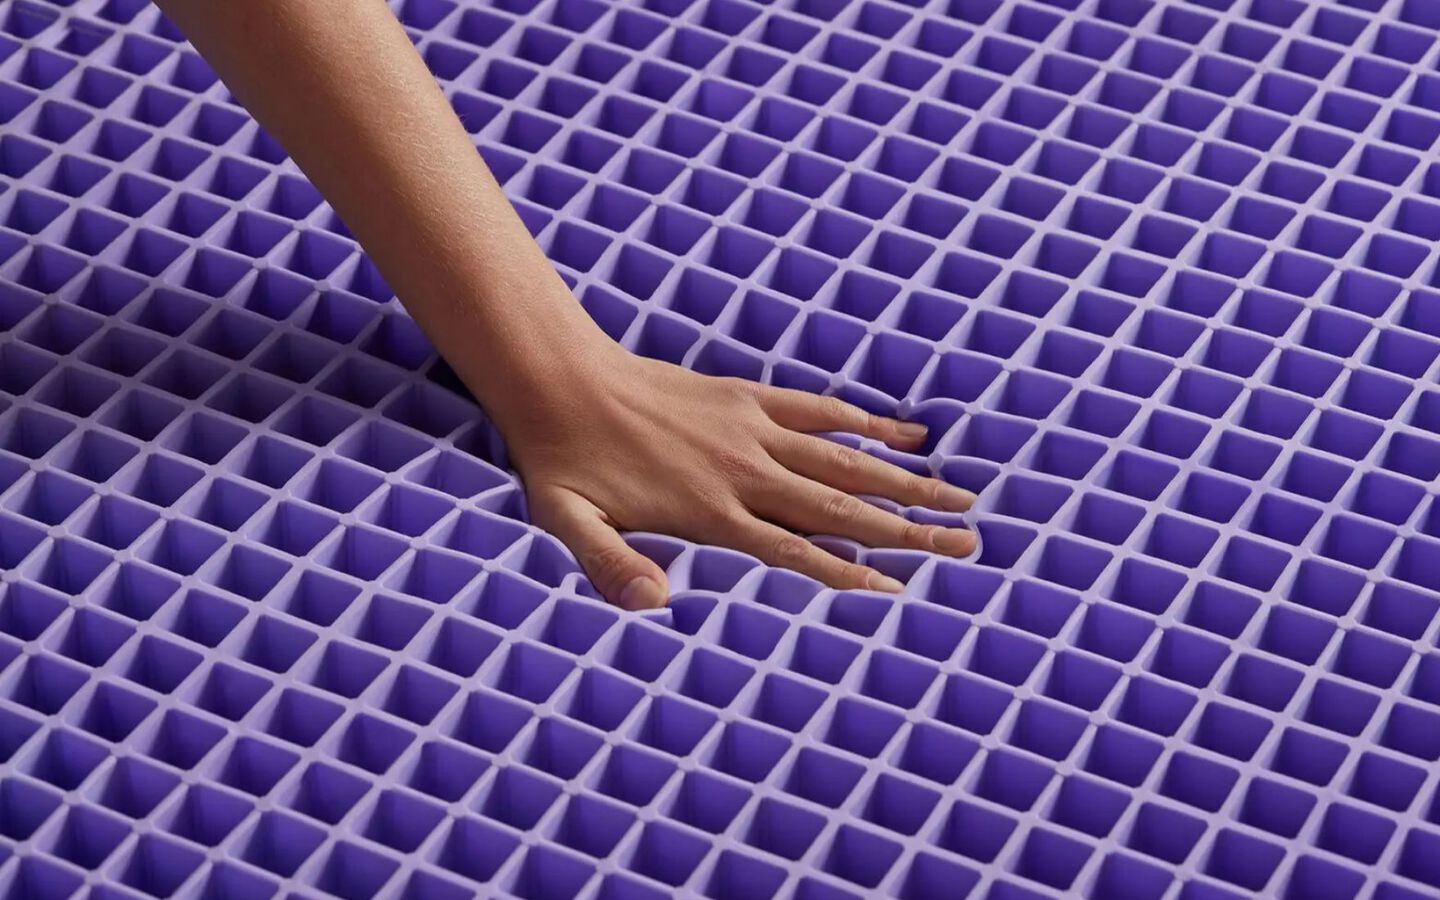 Hand pushing down on the Purple mattress matrix